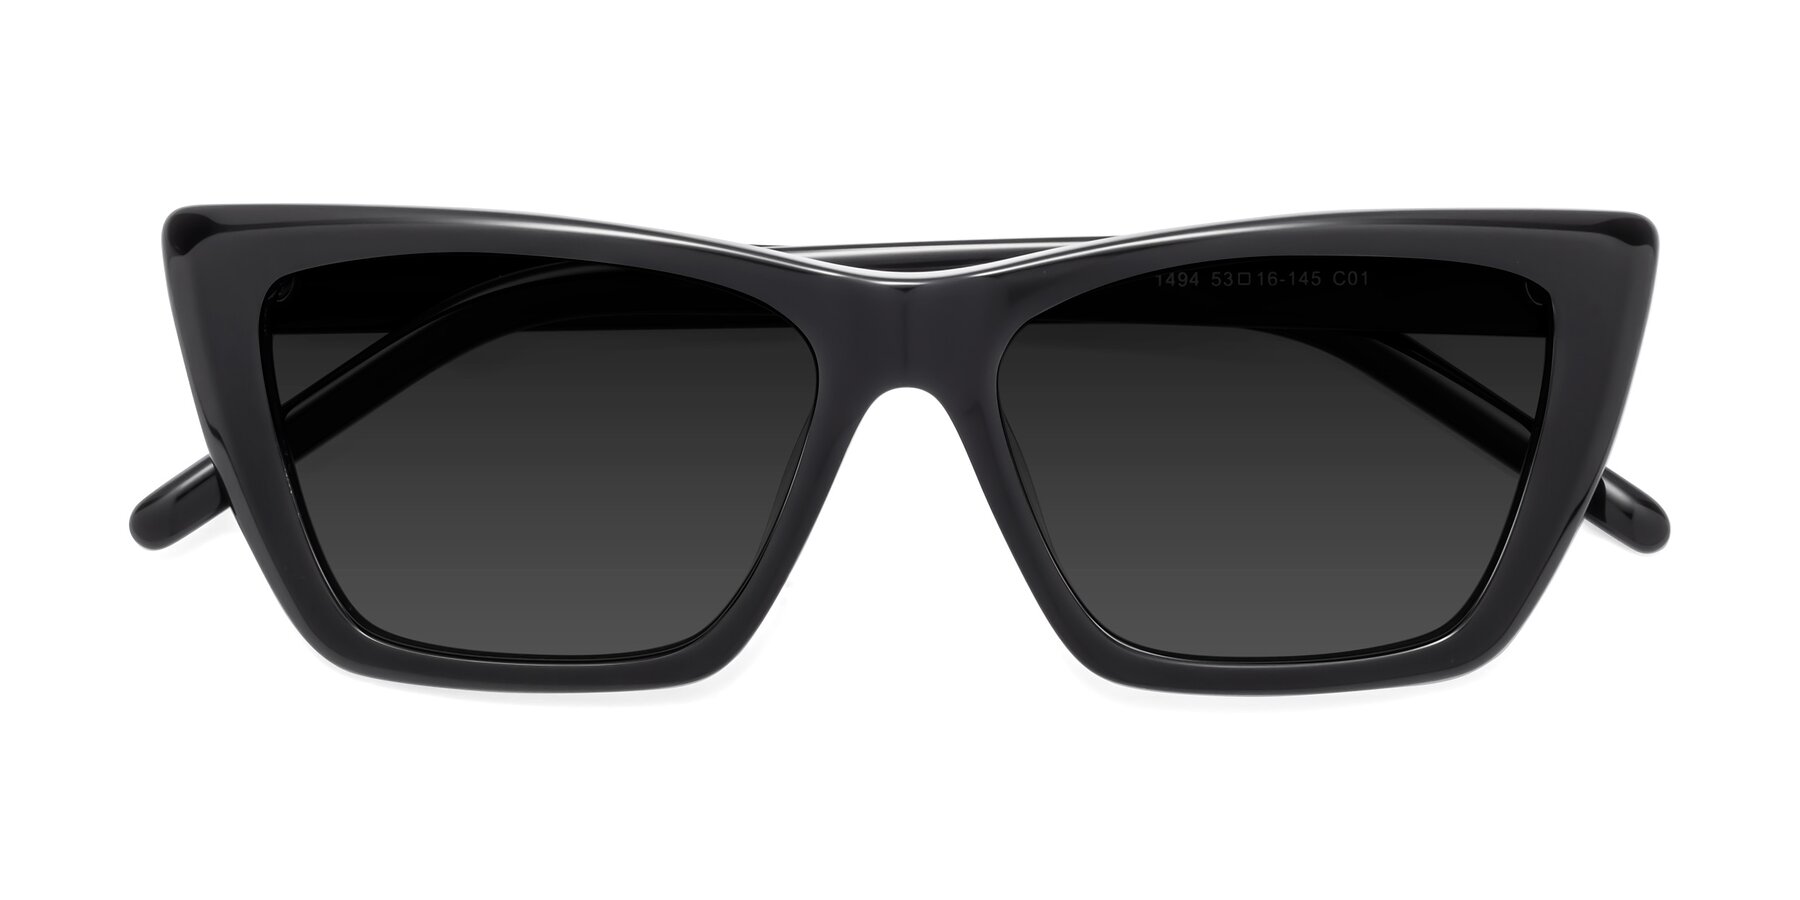 Polarized Matte Black Classic UVA-UVB Protection Sunglasses